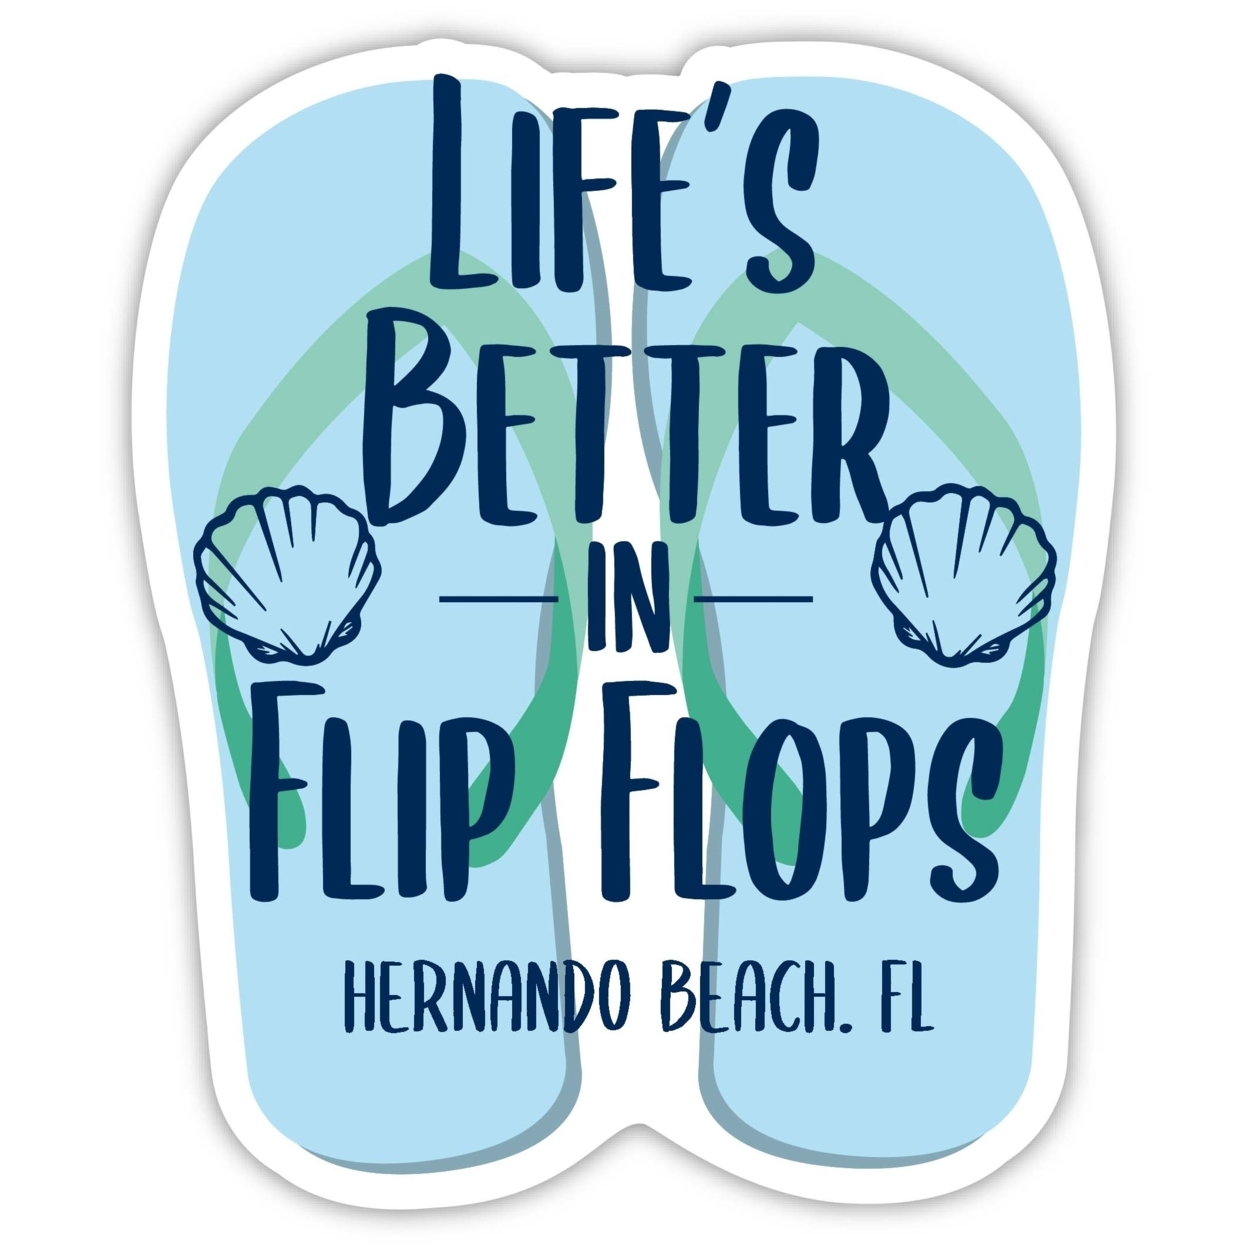 Hernando Beach Florida Souvenir 4 Inch Vinyl Decal Sticker Flip Flop Design